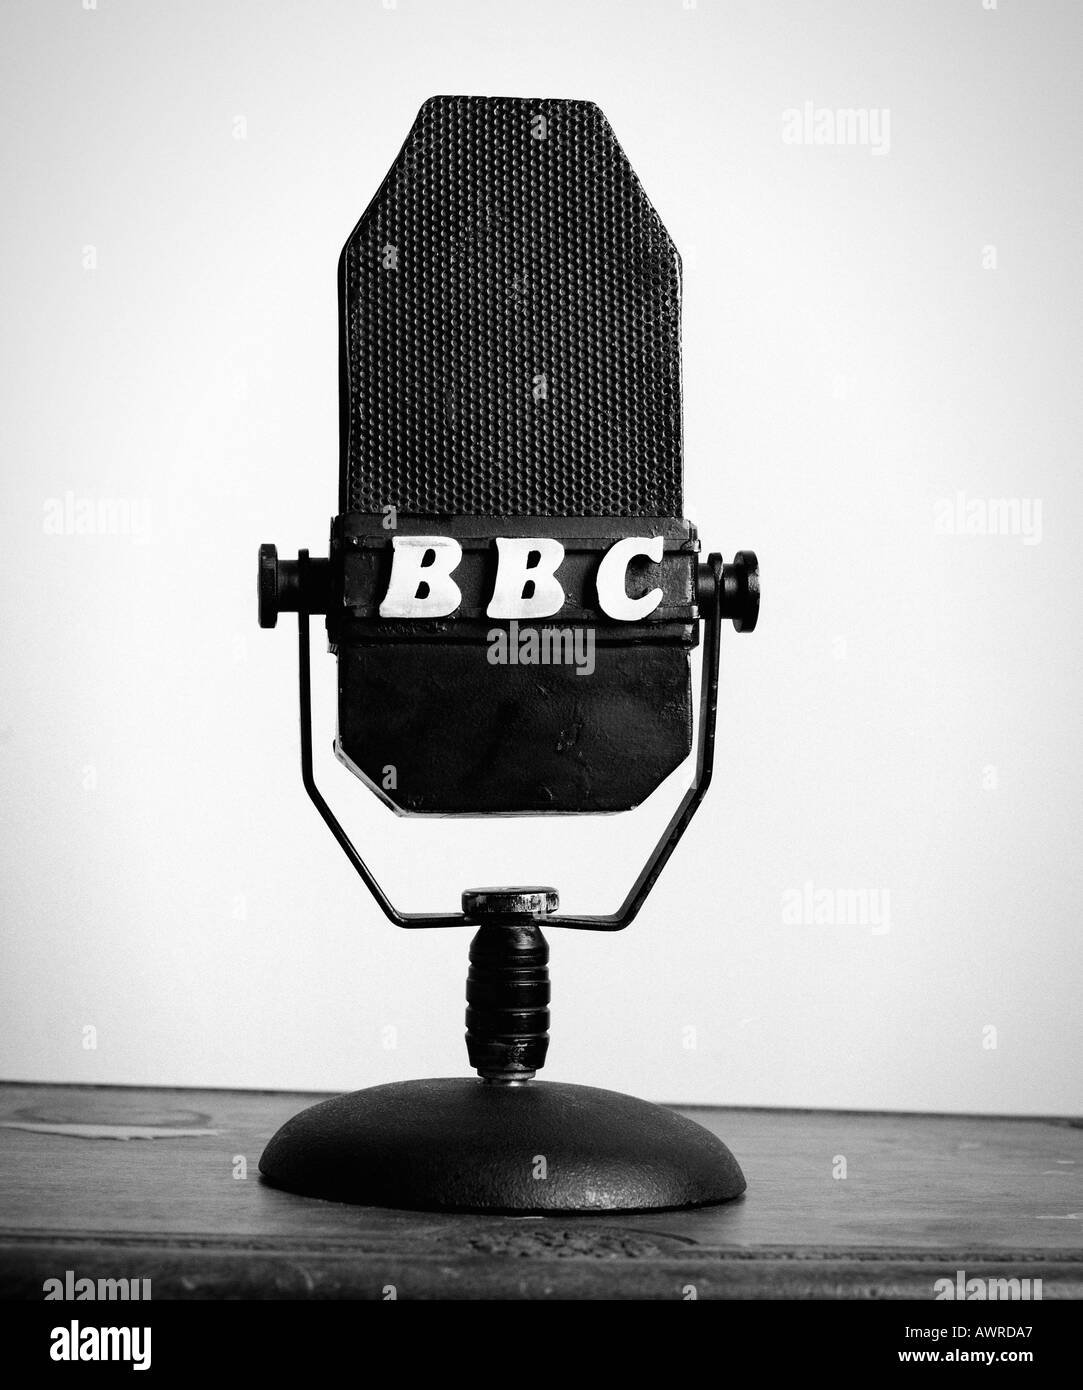 An old fashioned bbc radio microphone Stock Photo - Alamy